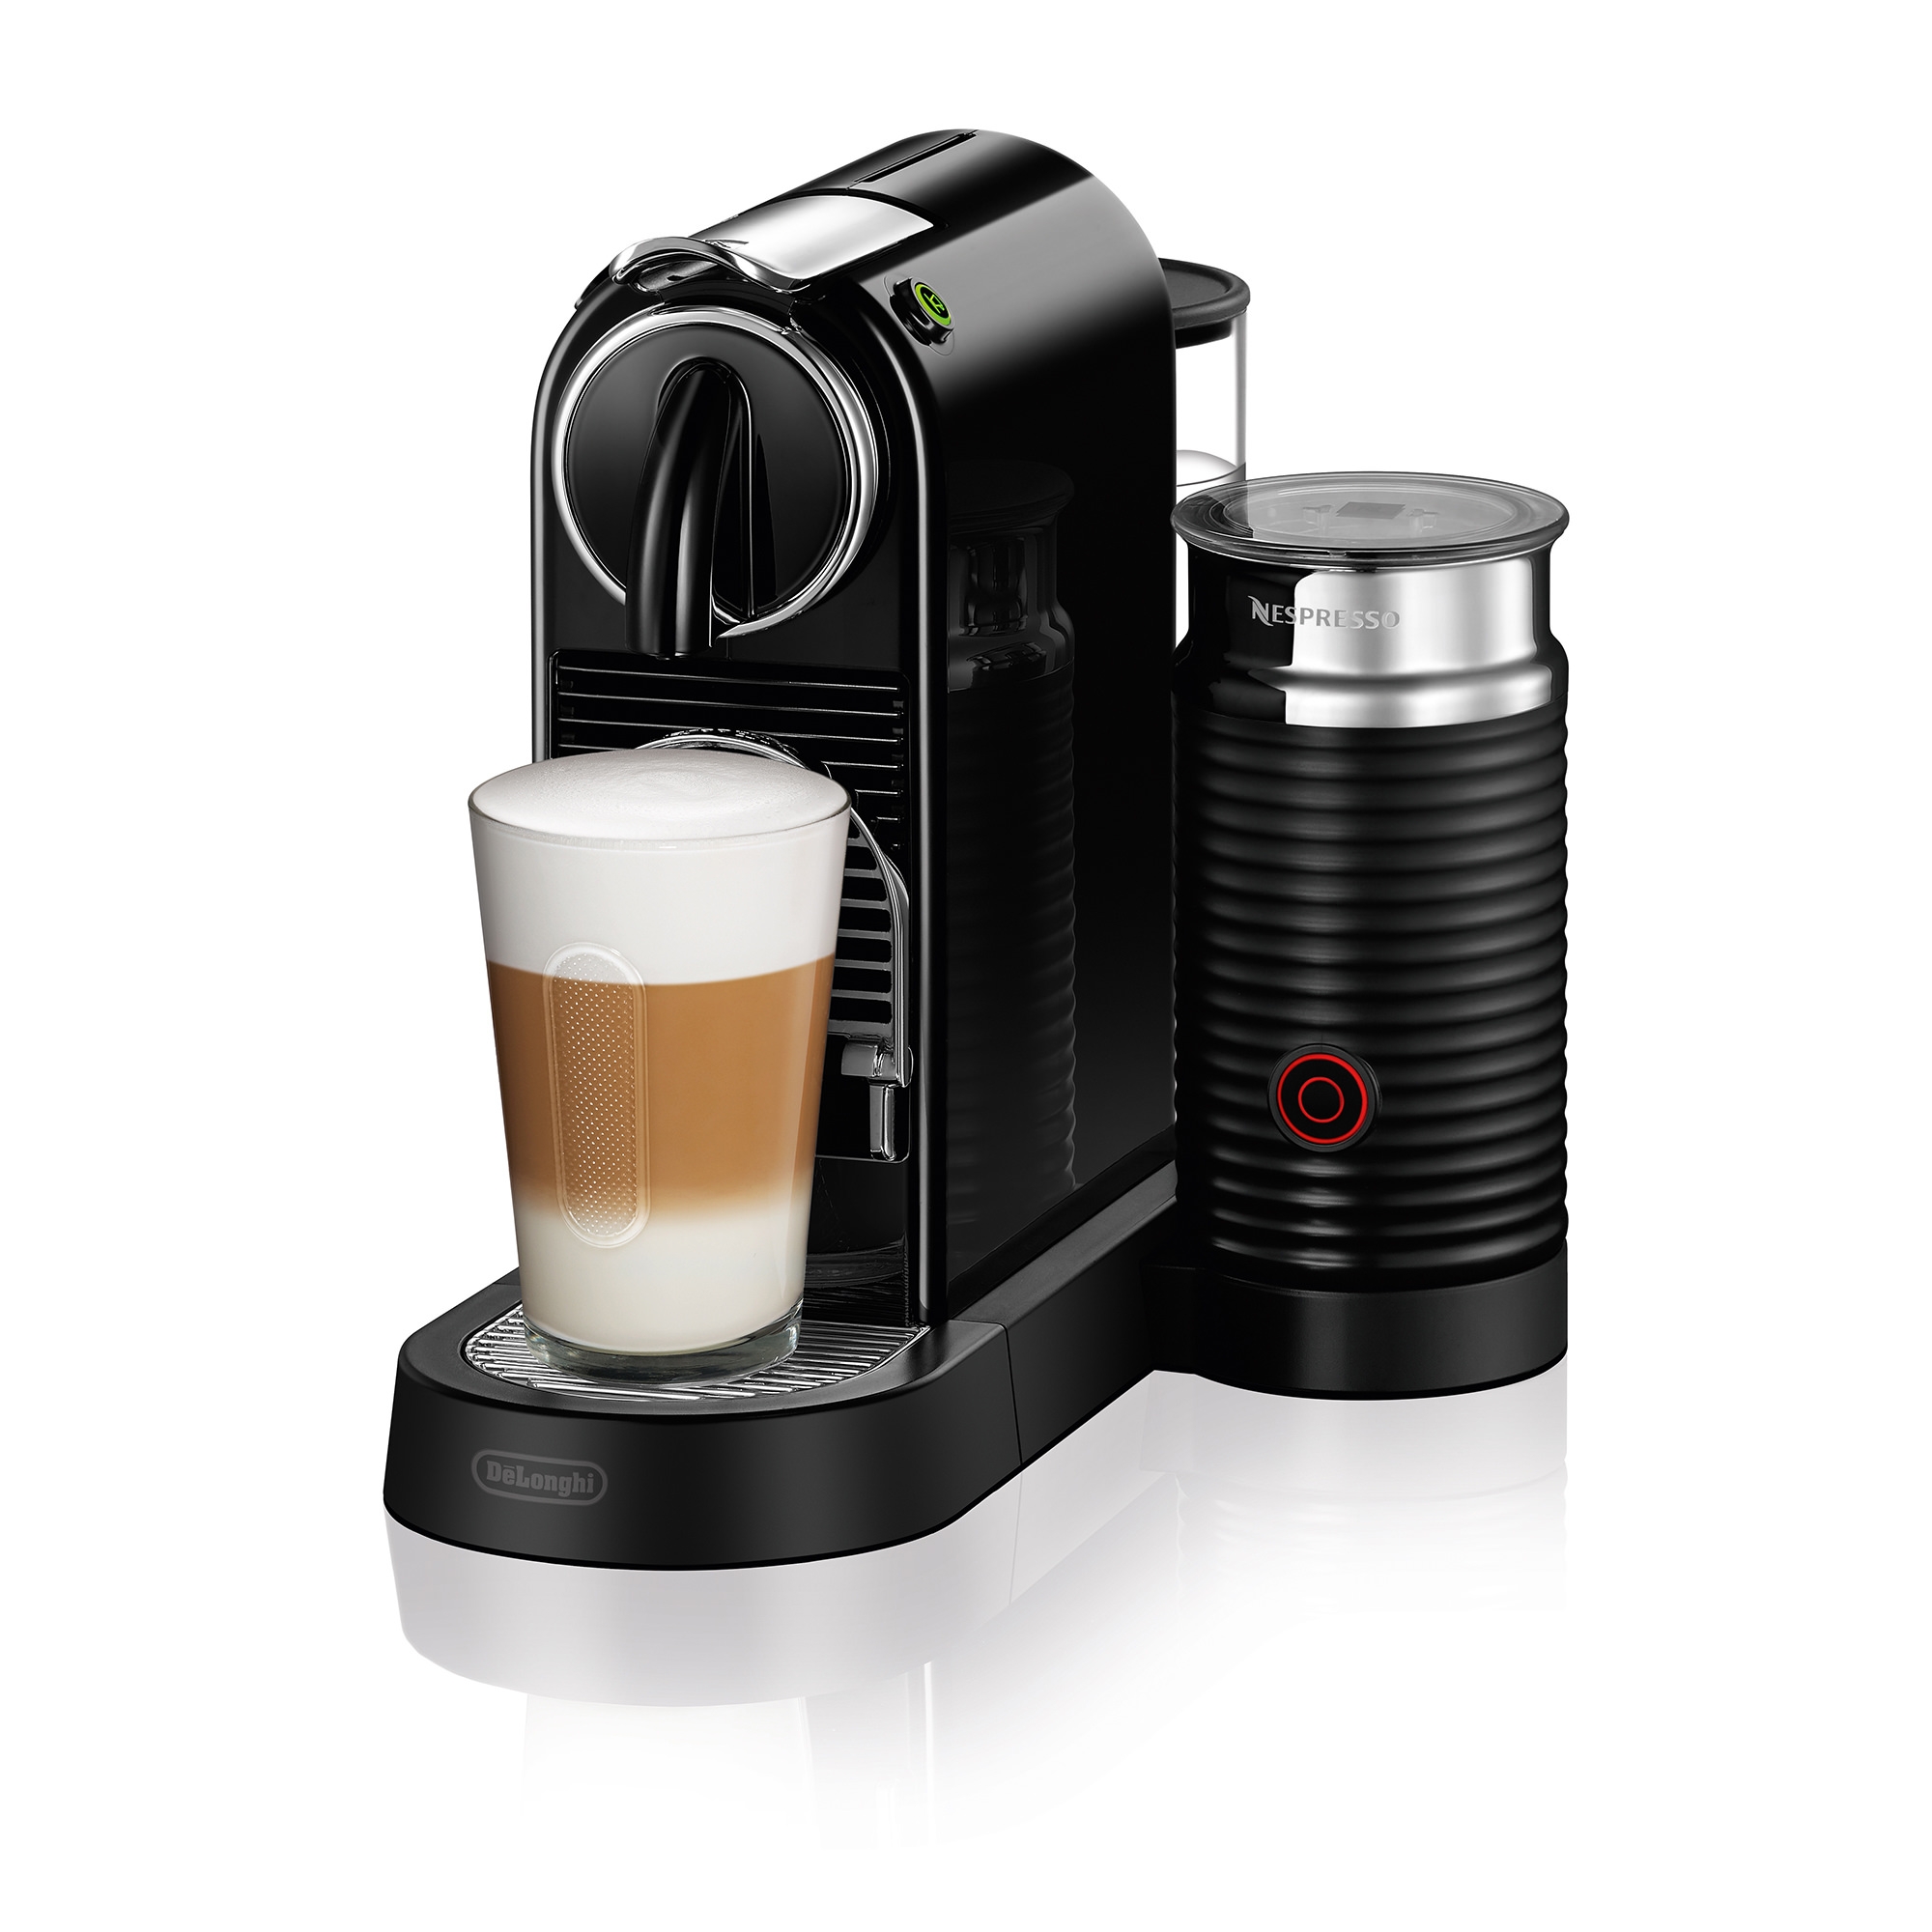 DeLonghi Nespresso Citiz EN267BAE Coffee Machine with Milk Frother Black Image 2